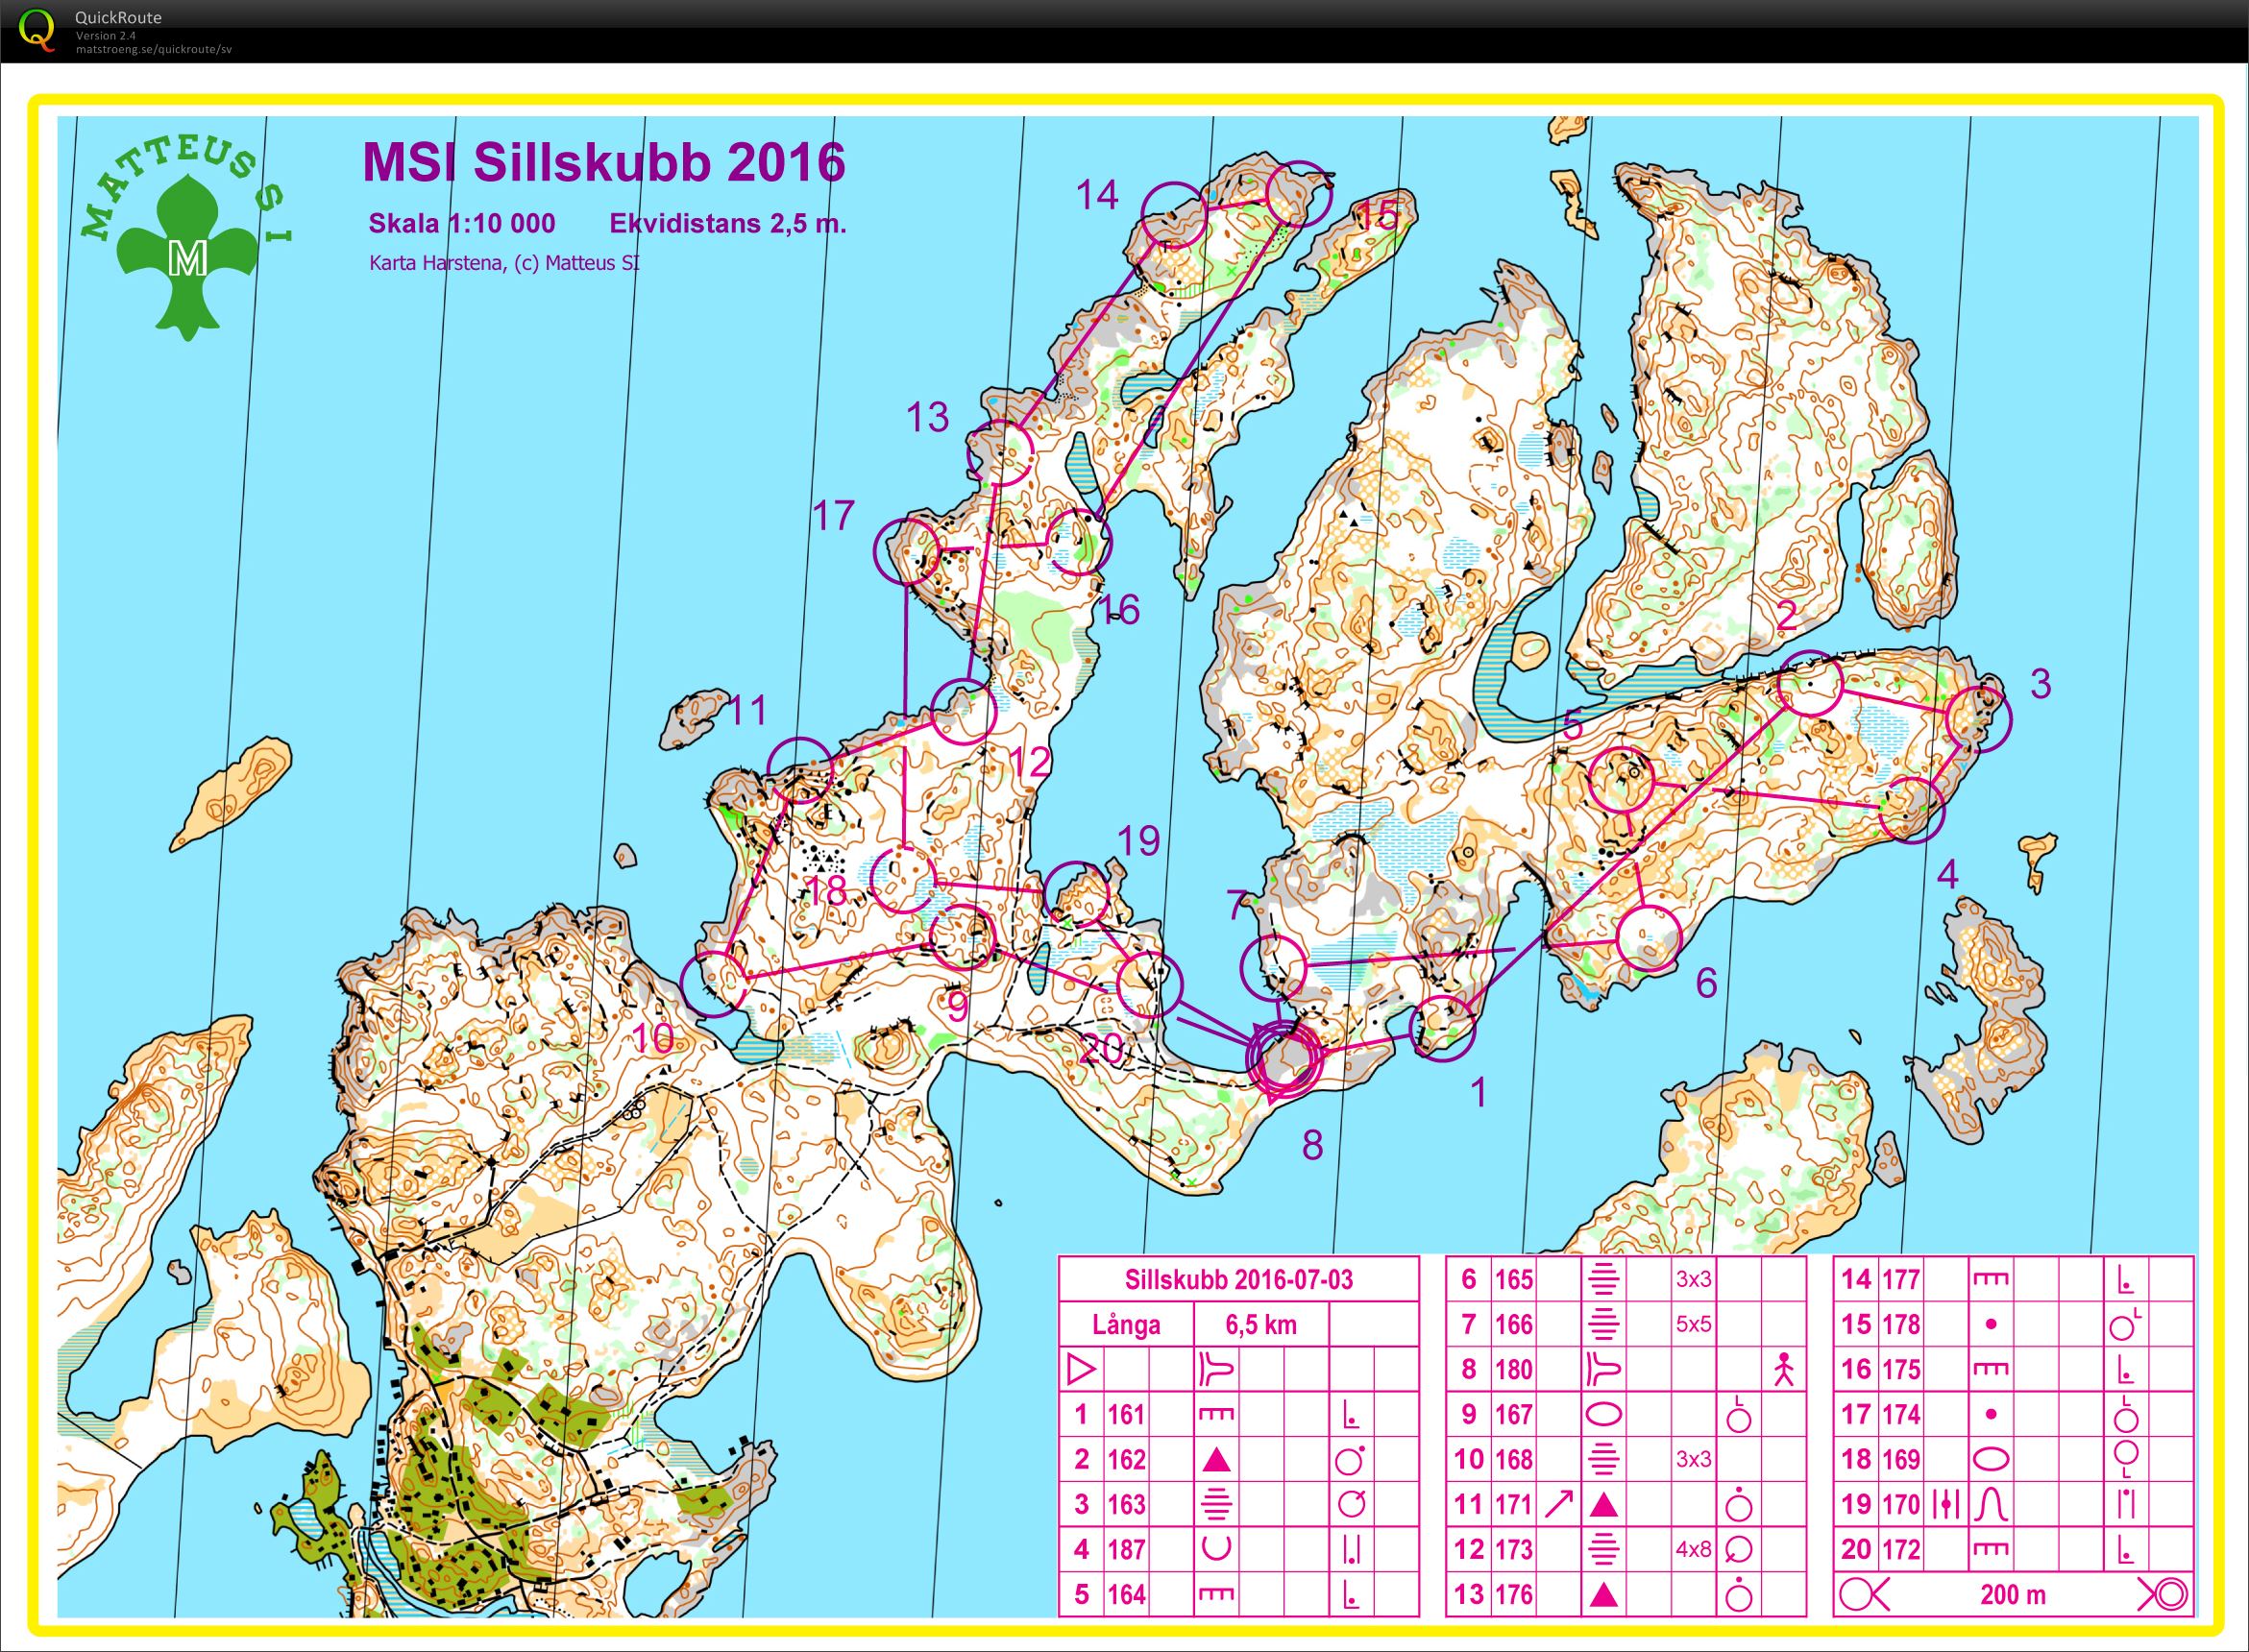 MSI Sillskubb 2016, Harstena (03-07-2016)